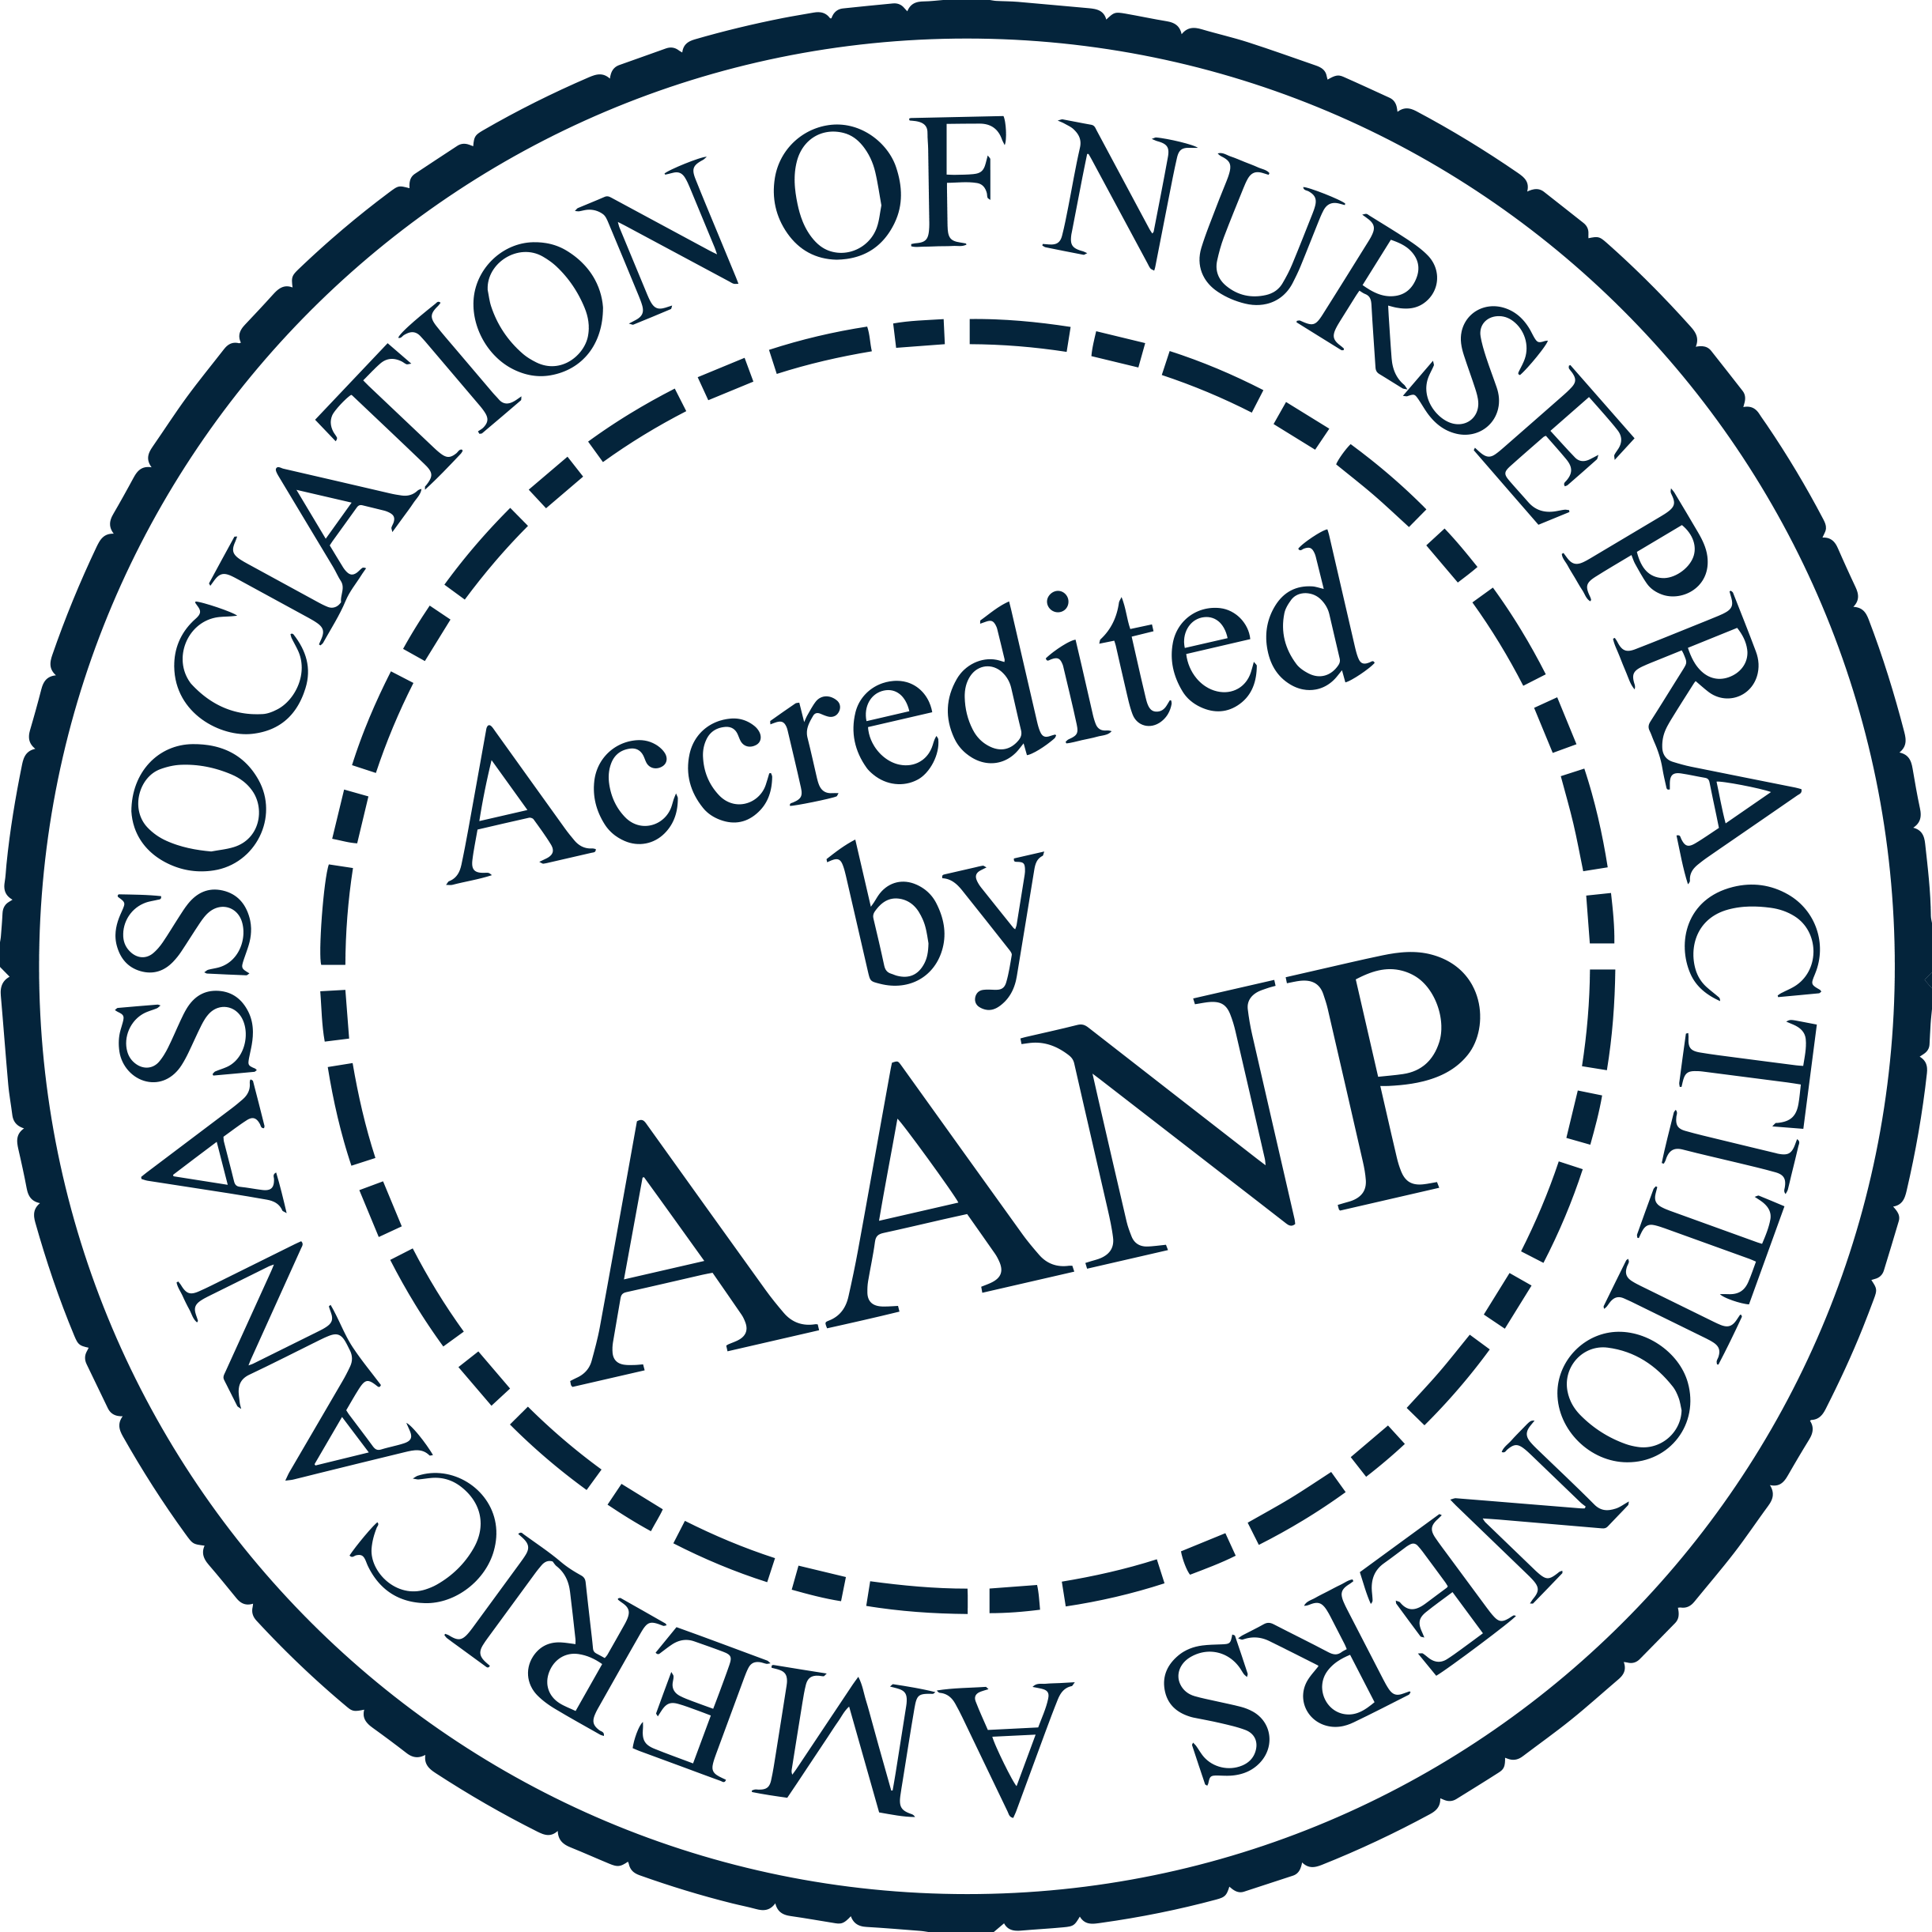 AANP Accreditation